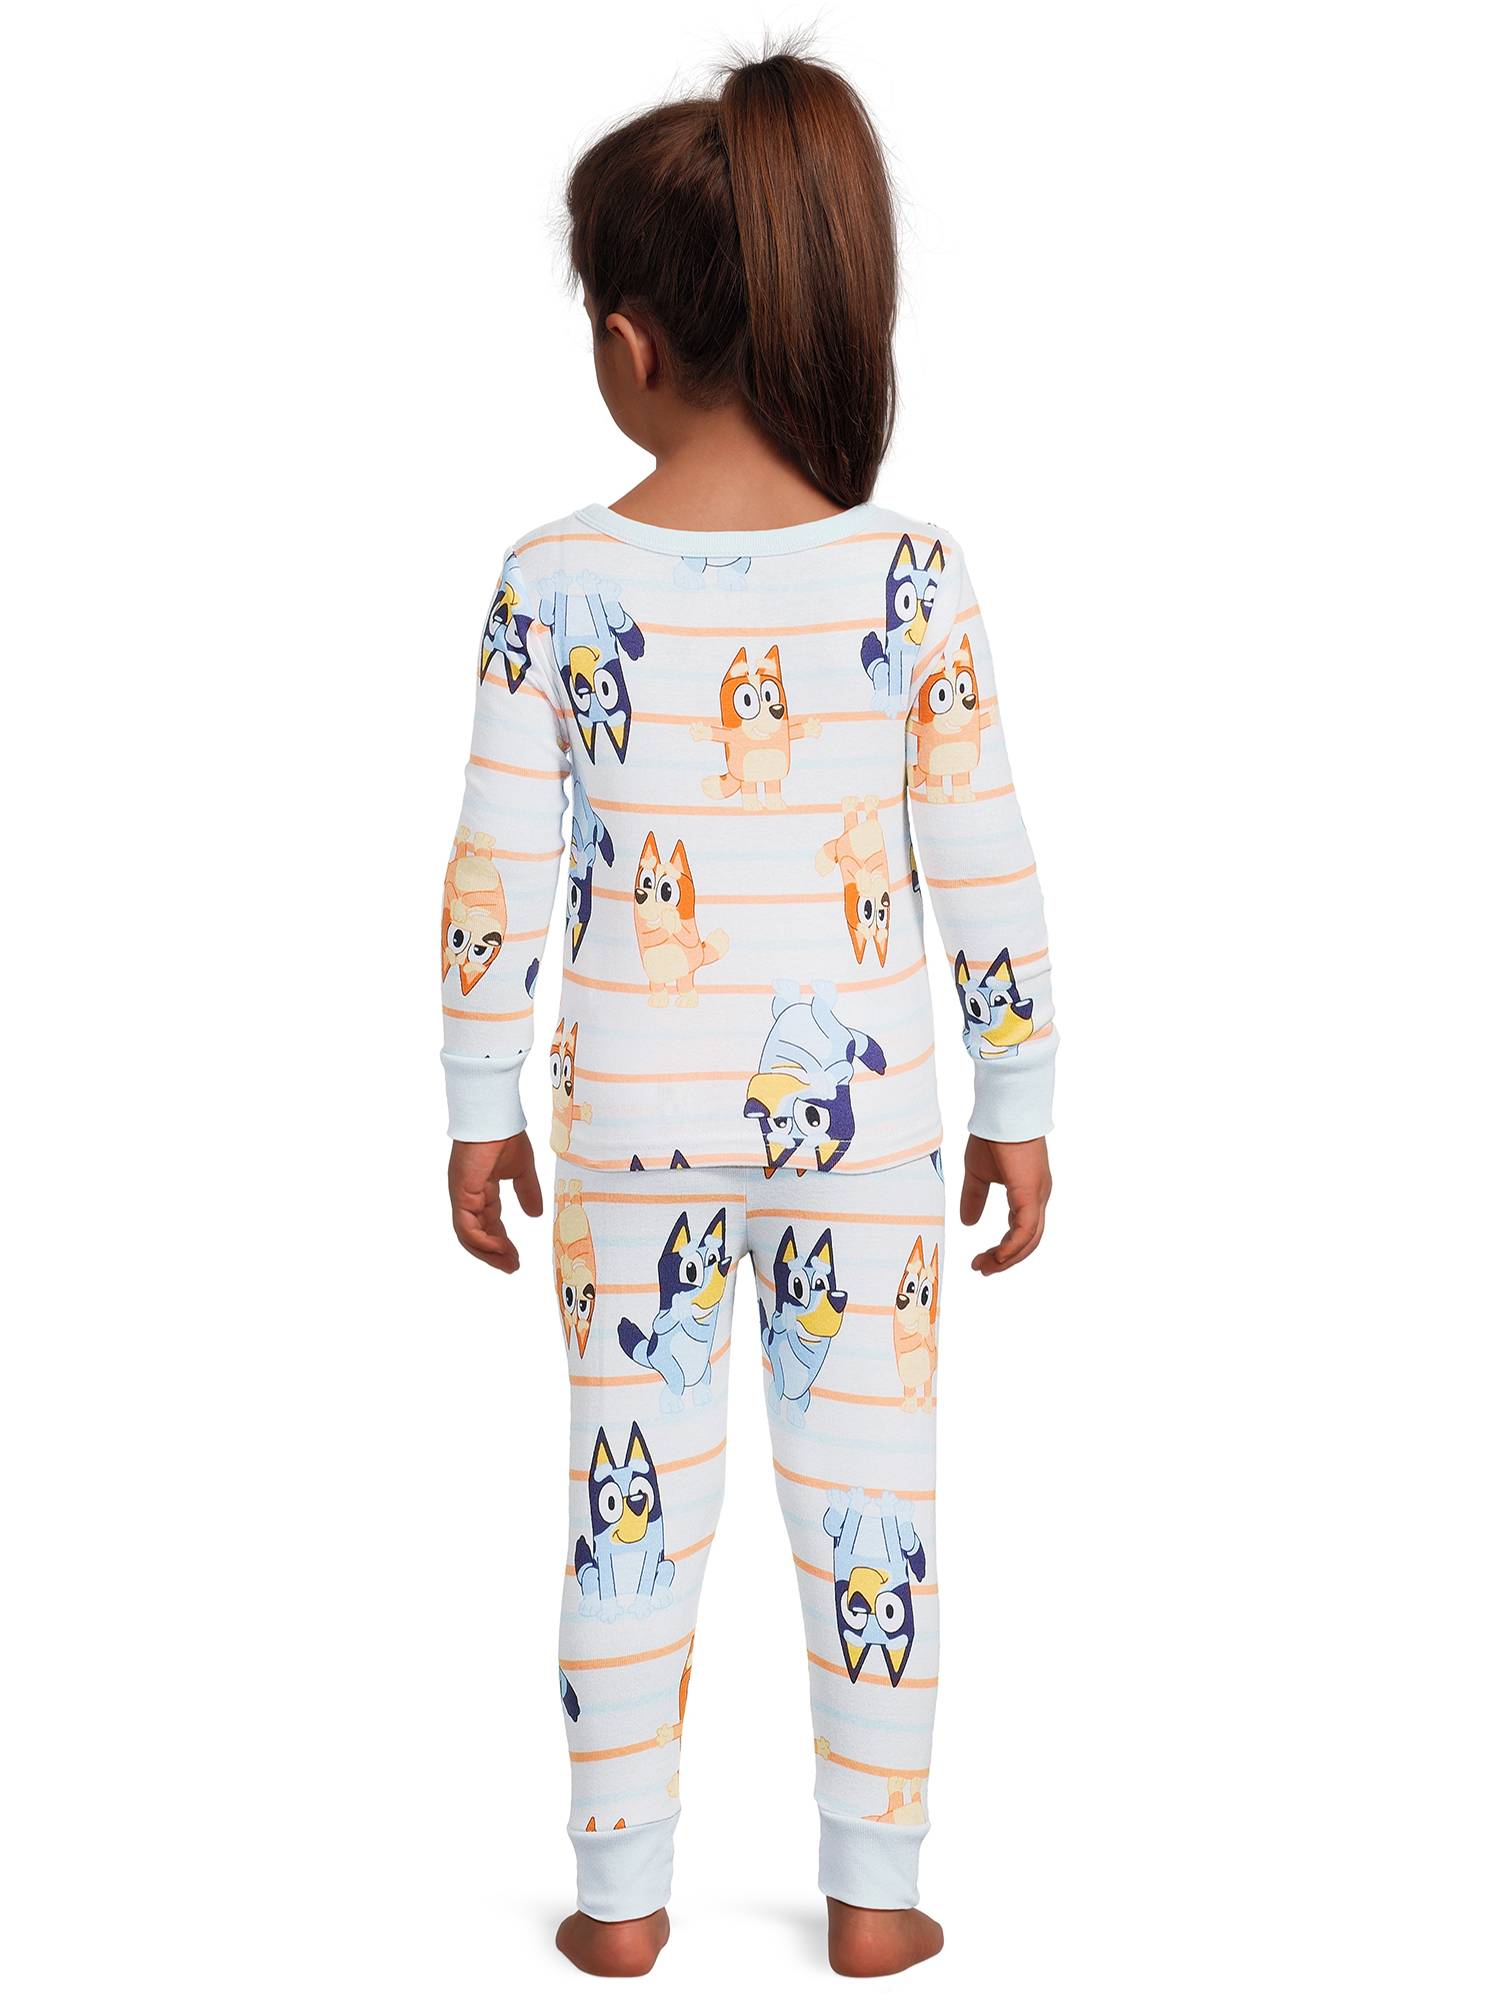 Bluey Toddler Unisex Long Sleeve Top and Pants, 2-Piece Pajama Set, Sizes 12M-5T - image 4 of 9